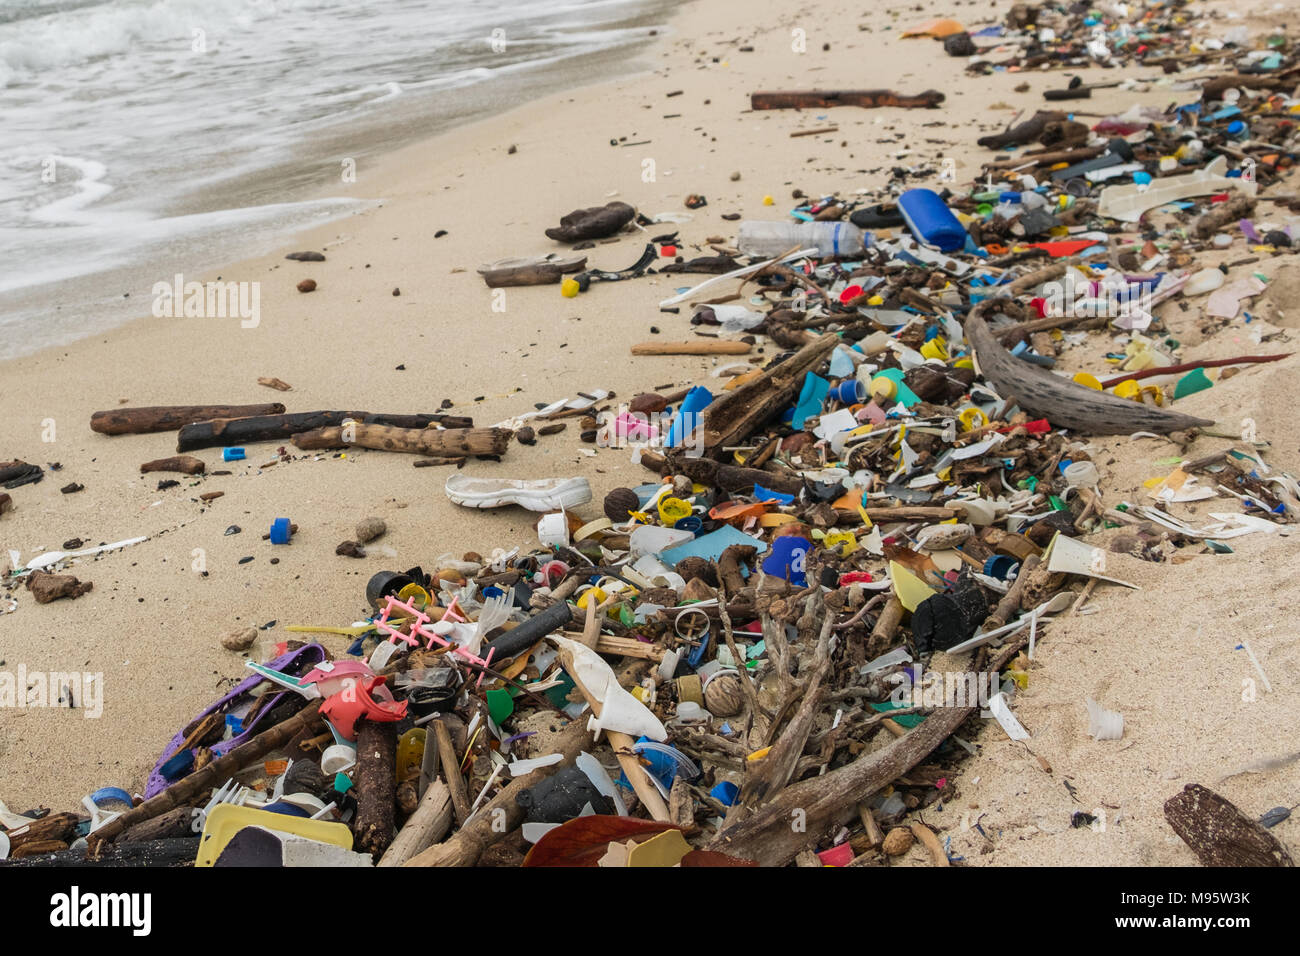 Verschmutzten Strand - Kunststoffabfälle, Abfall und Müll closeup - Stockfoto